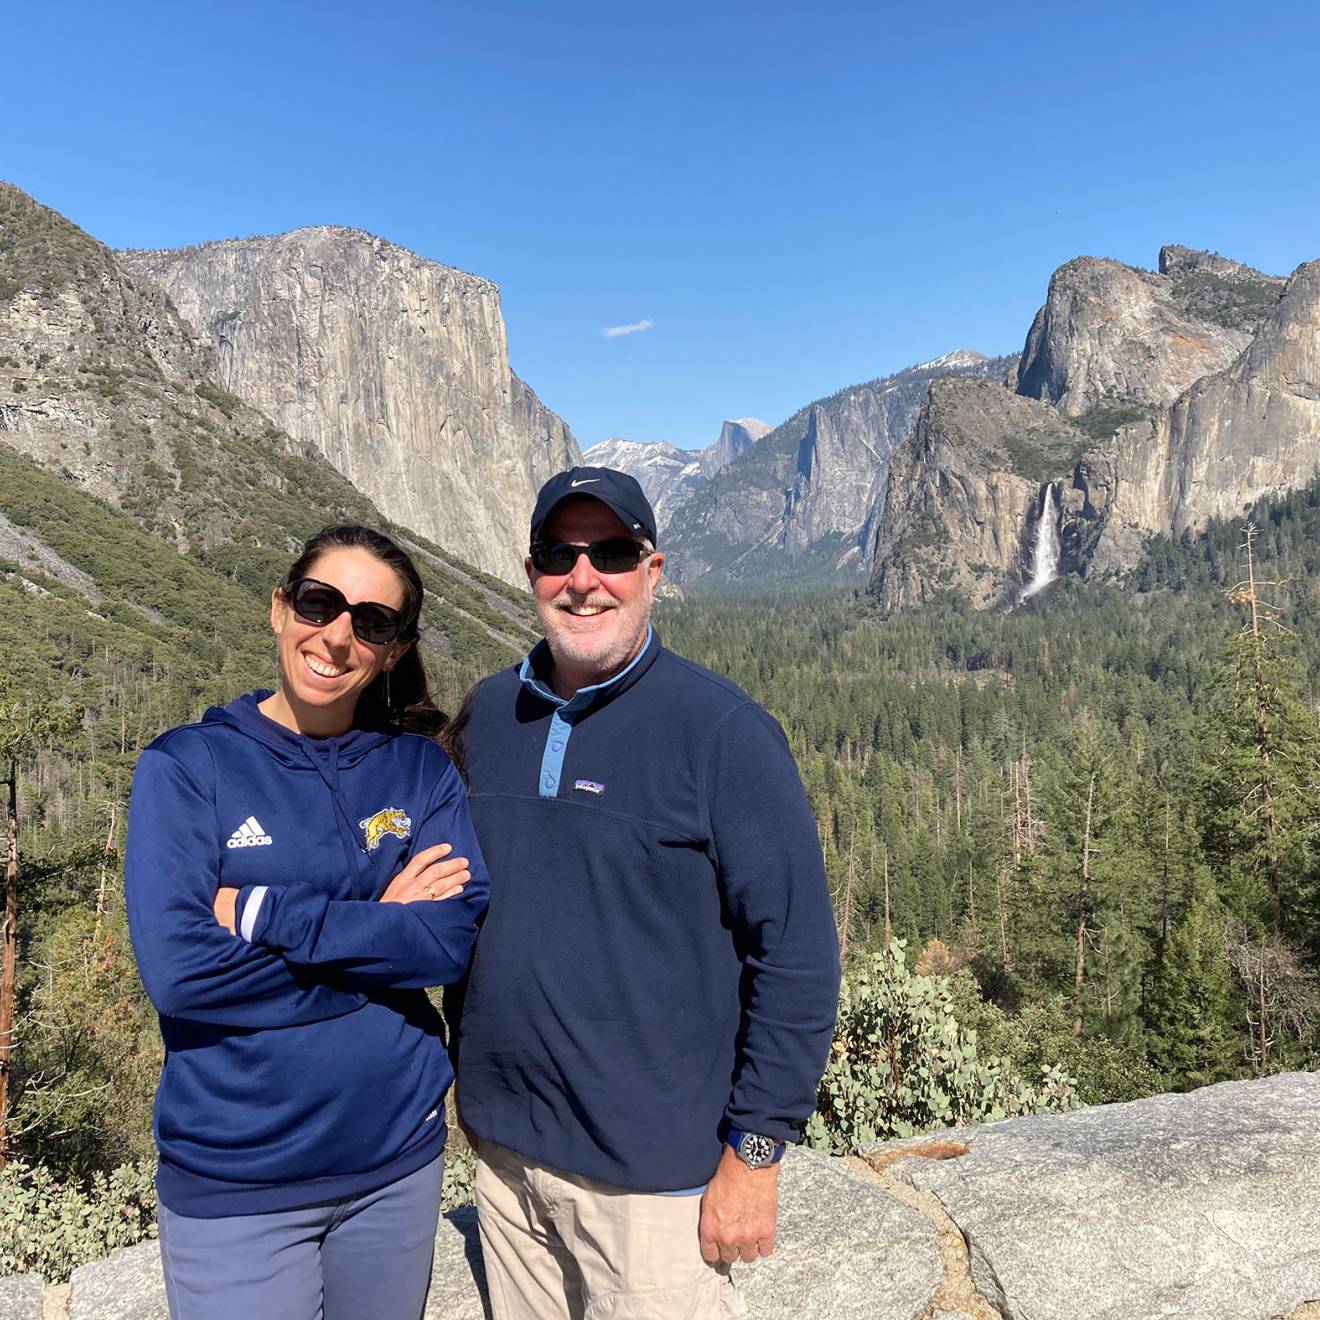 Steve Monfort and Breezy Jackson at Yosemite